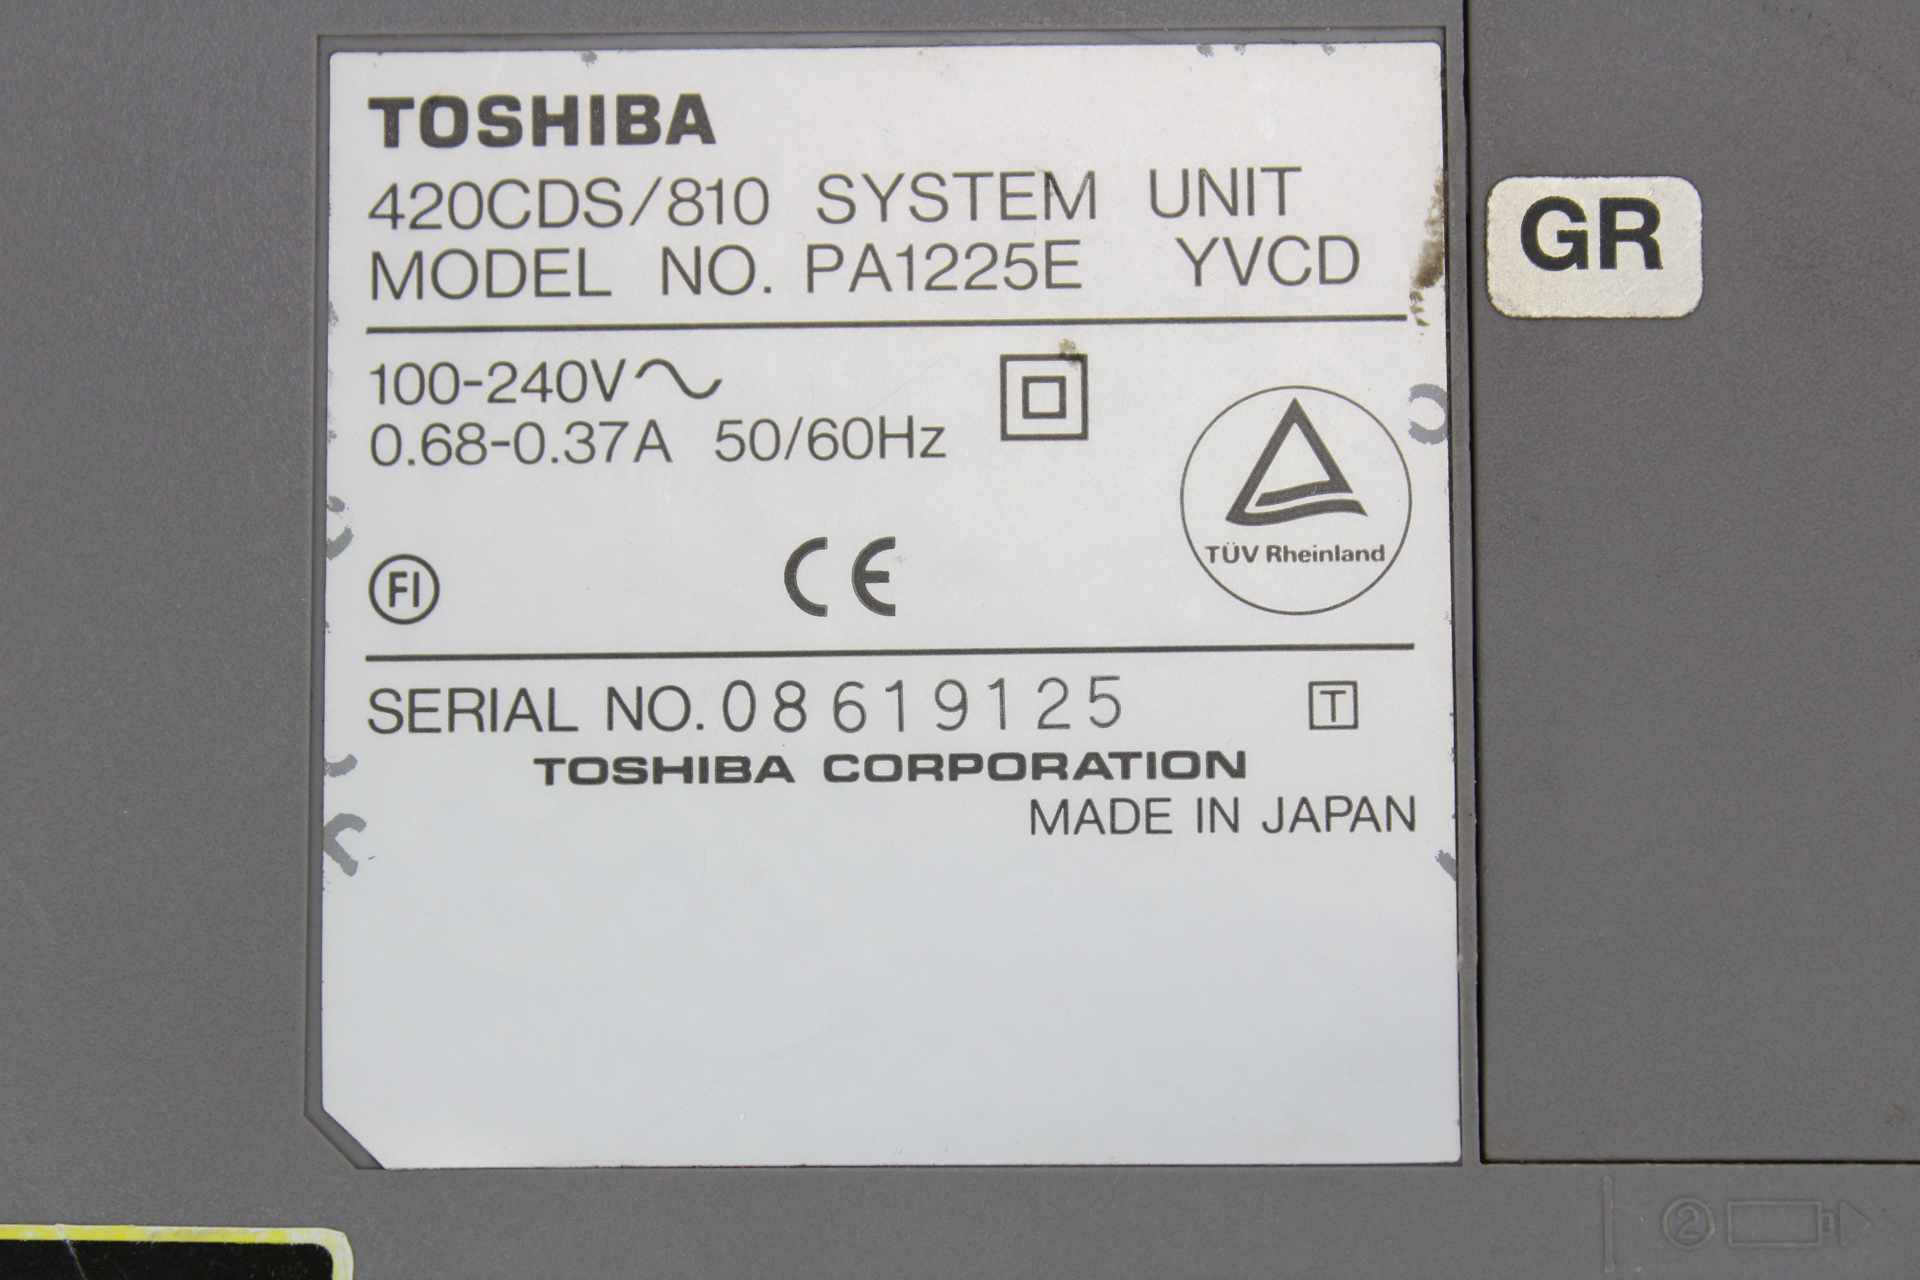 Toshiba Satellite Pro 420CDS